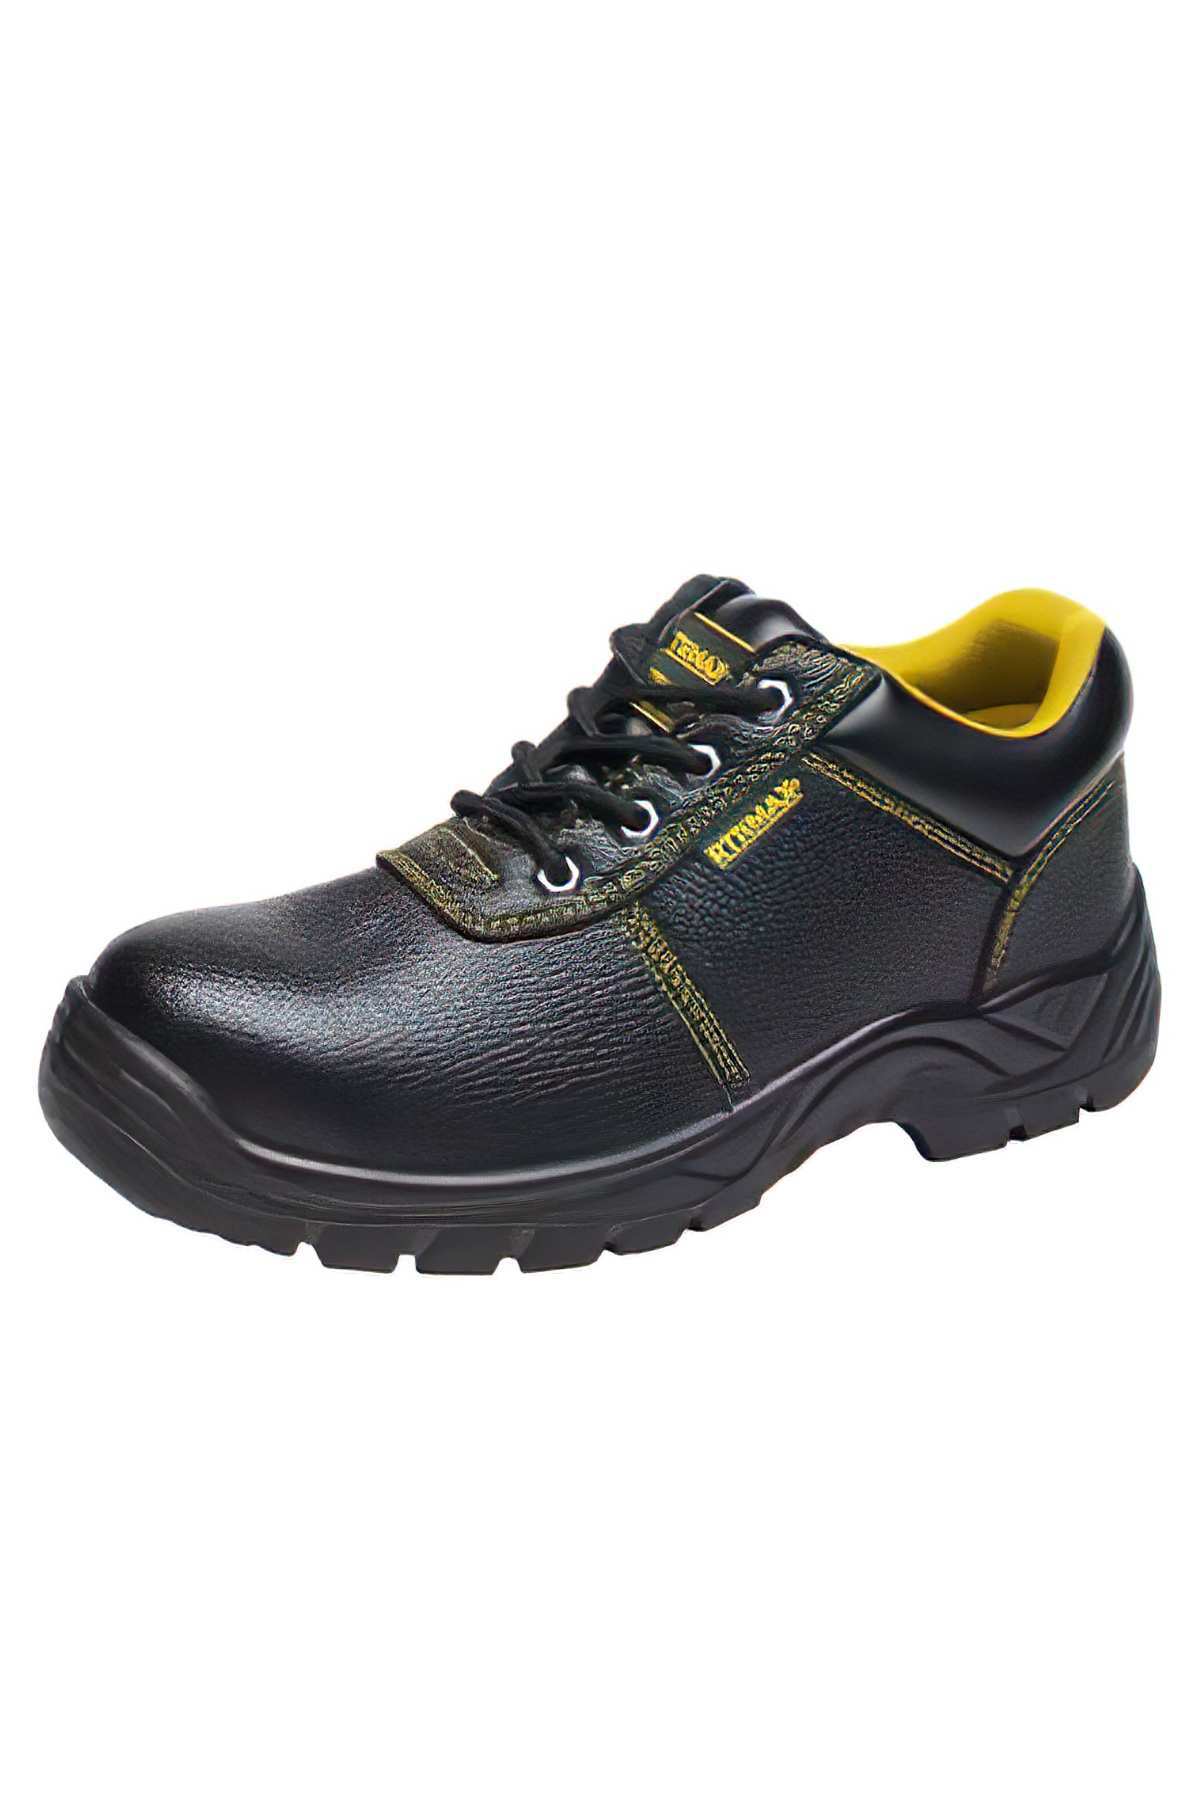 RTRMAX RHS2645 Güvenlik Ayakkabısı 